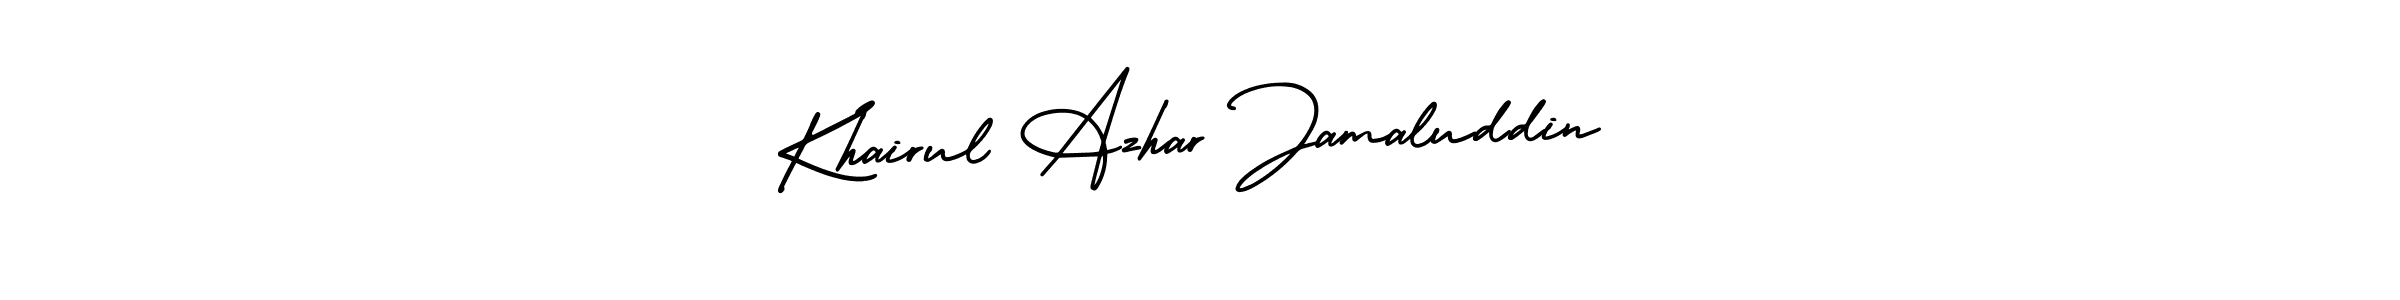 98+ Khairul Azhar Jamaluddin Name Signature Style Ideas | Fine eSign